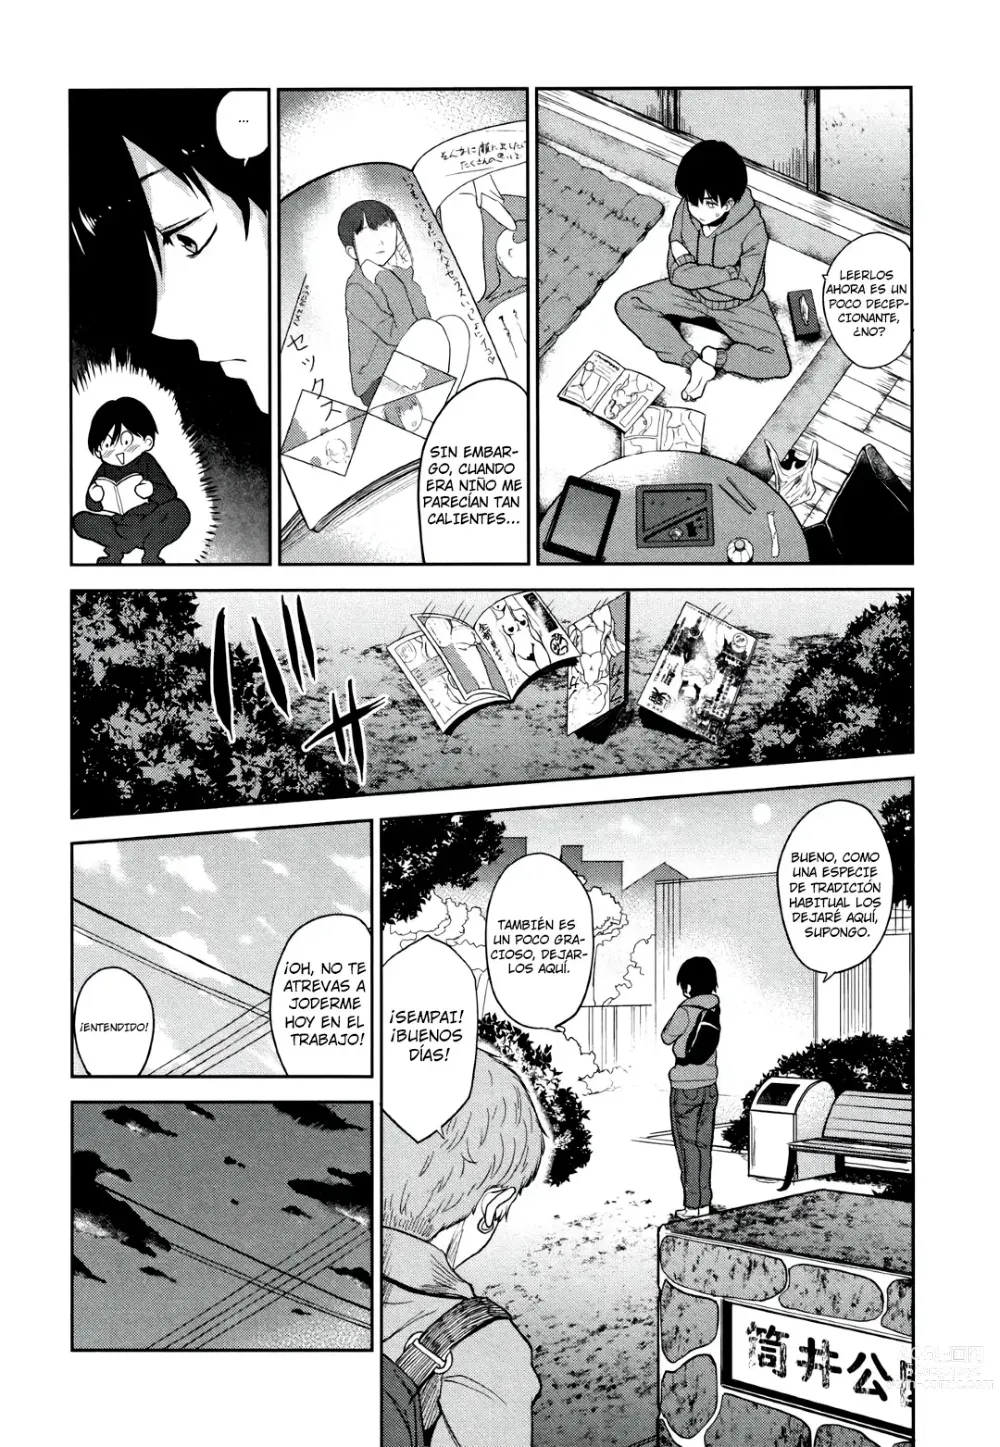 Page 7 of manga Kawaii Onnanoko o Tsuru Houhou - Method to catch a pretty girl